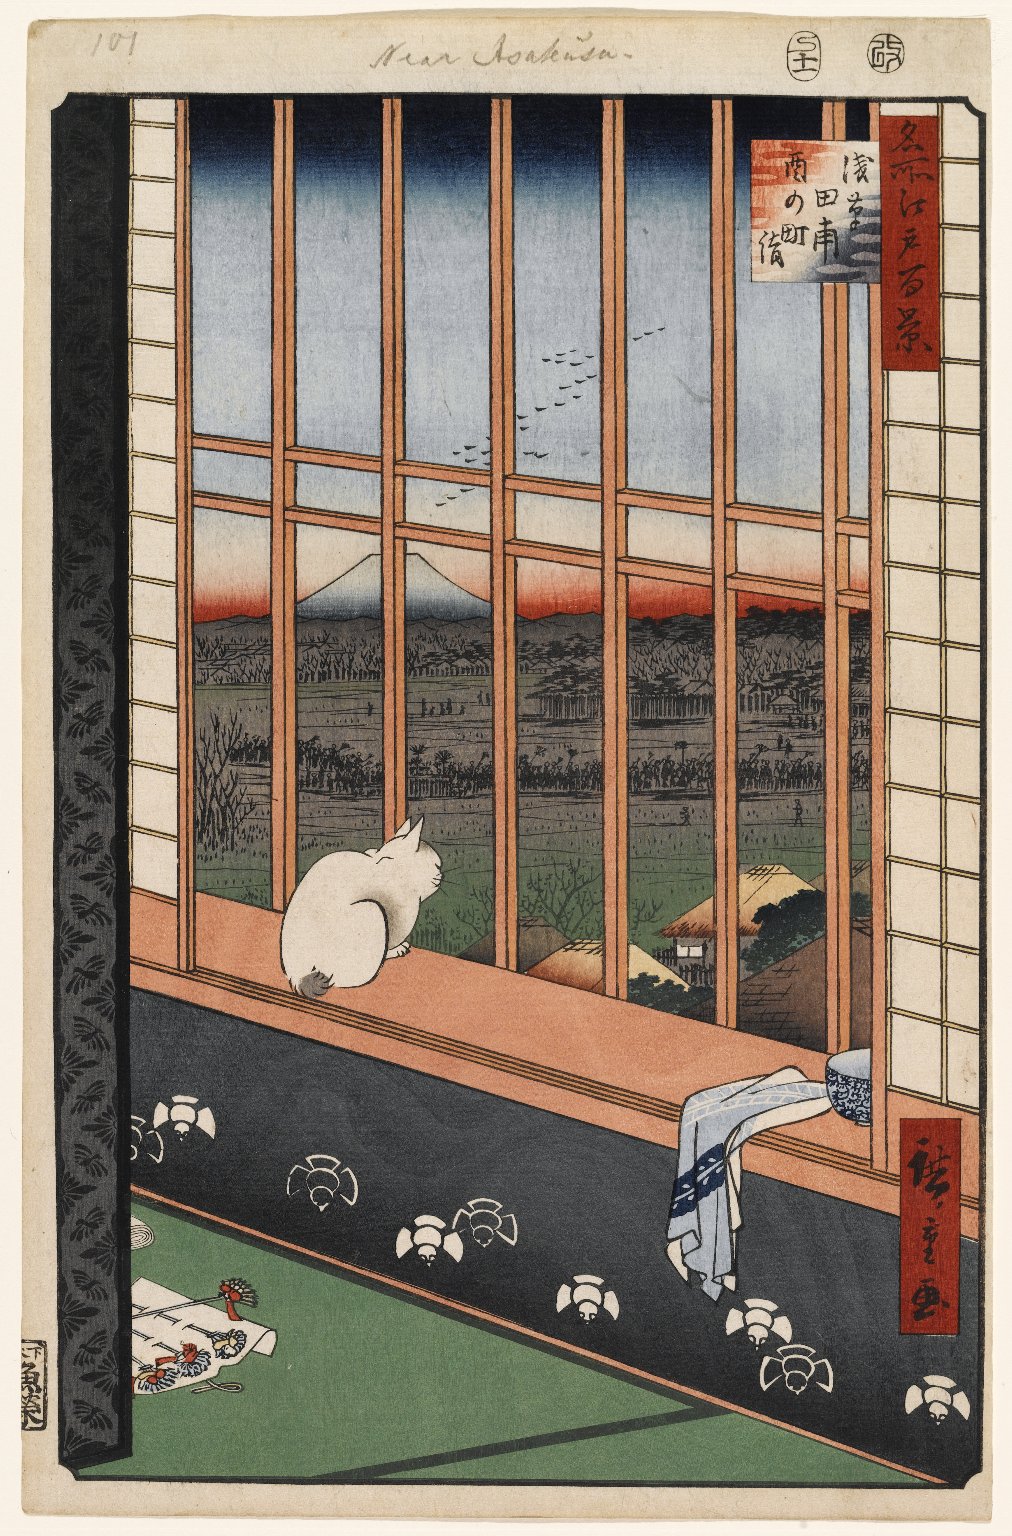 Asakusa Ricefields and Torinomachi Festival, No. 101 by  Hiroshige - 1857 - 36 x 23.5 cm Brooklyn Museum